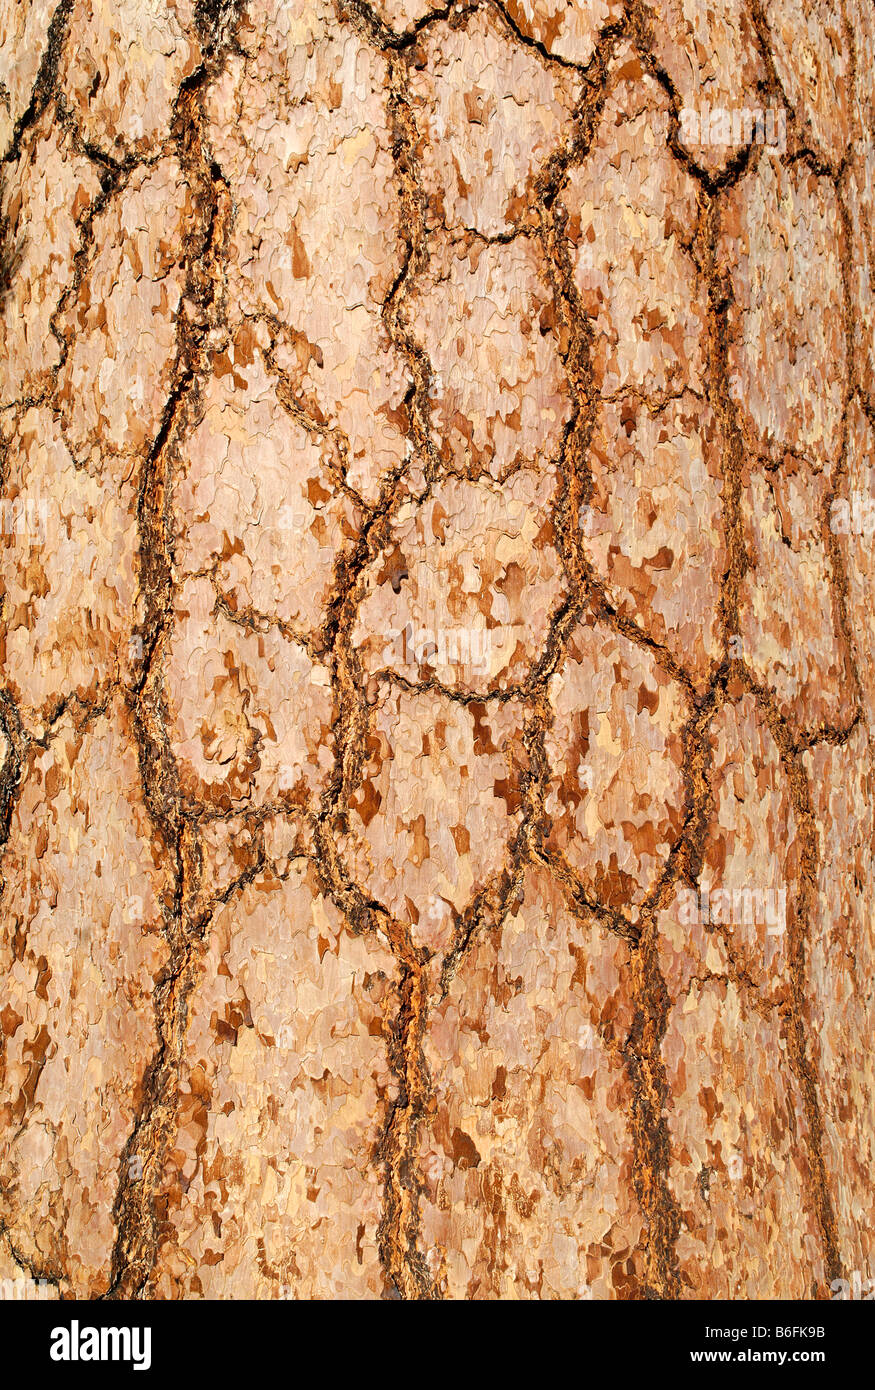 Bark of a Ponderosa Pine or Western Yellow Pine (Pinus ponderosa) Stock Photo